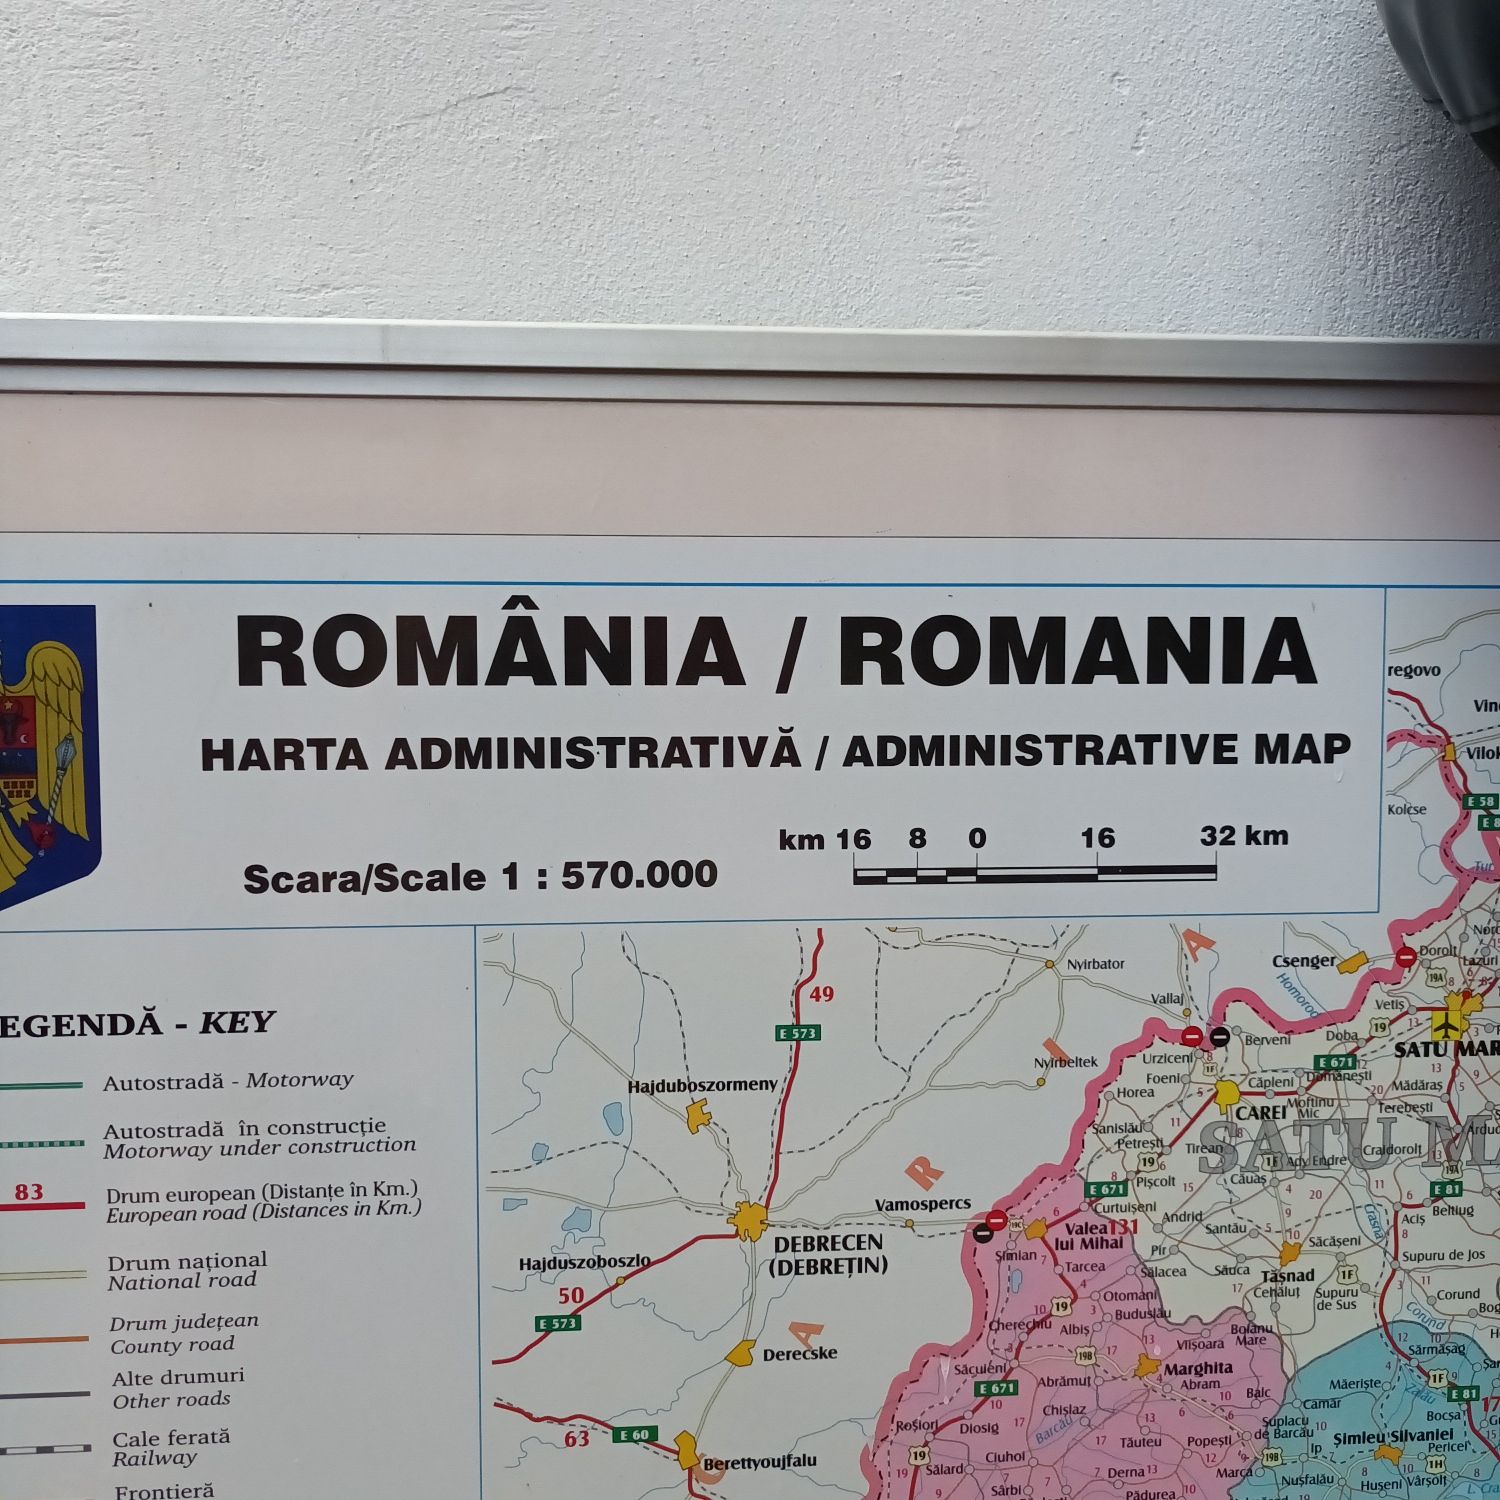 Harta administrativa a Romaniei, metalica. 100x140cm